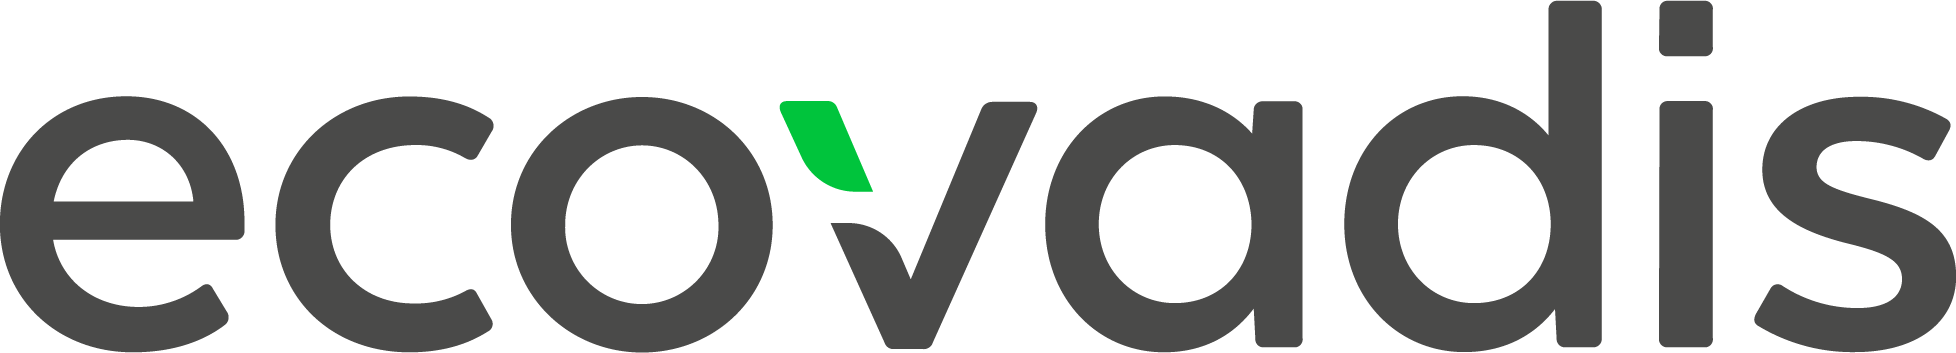 EcoVadis logo.png